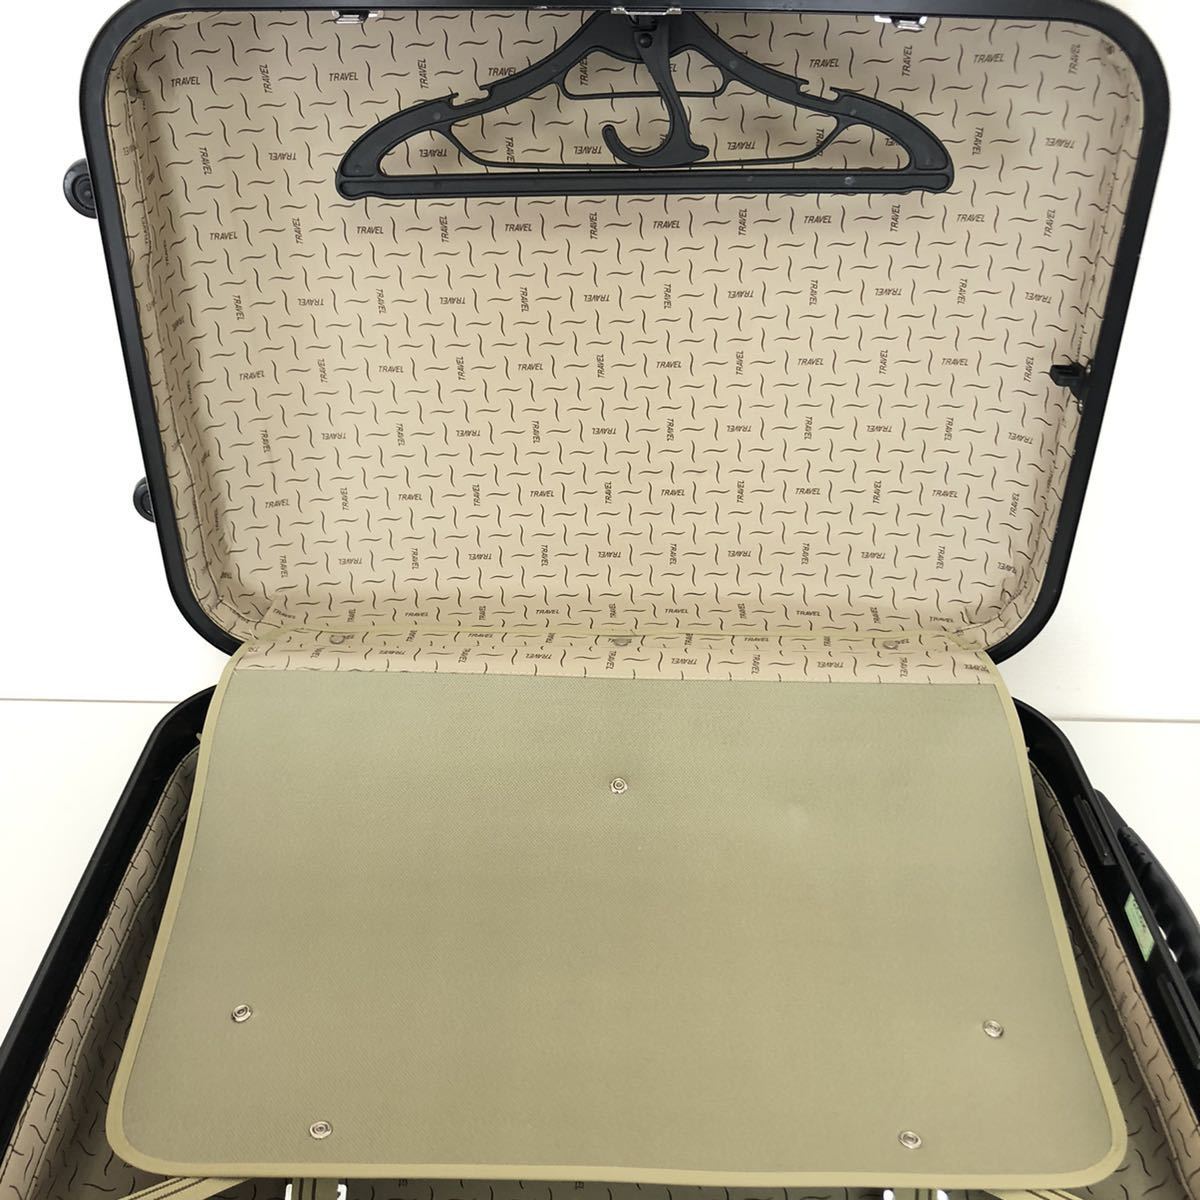 FIDELE スーツケース トランク キャリーケース 大容量 ロック 鍵